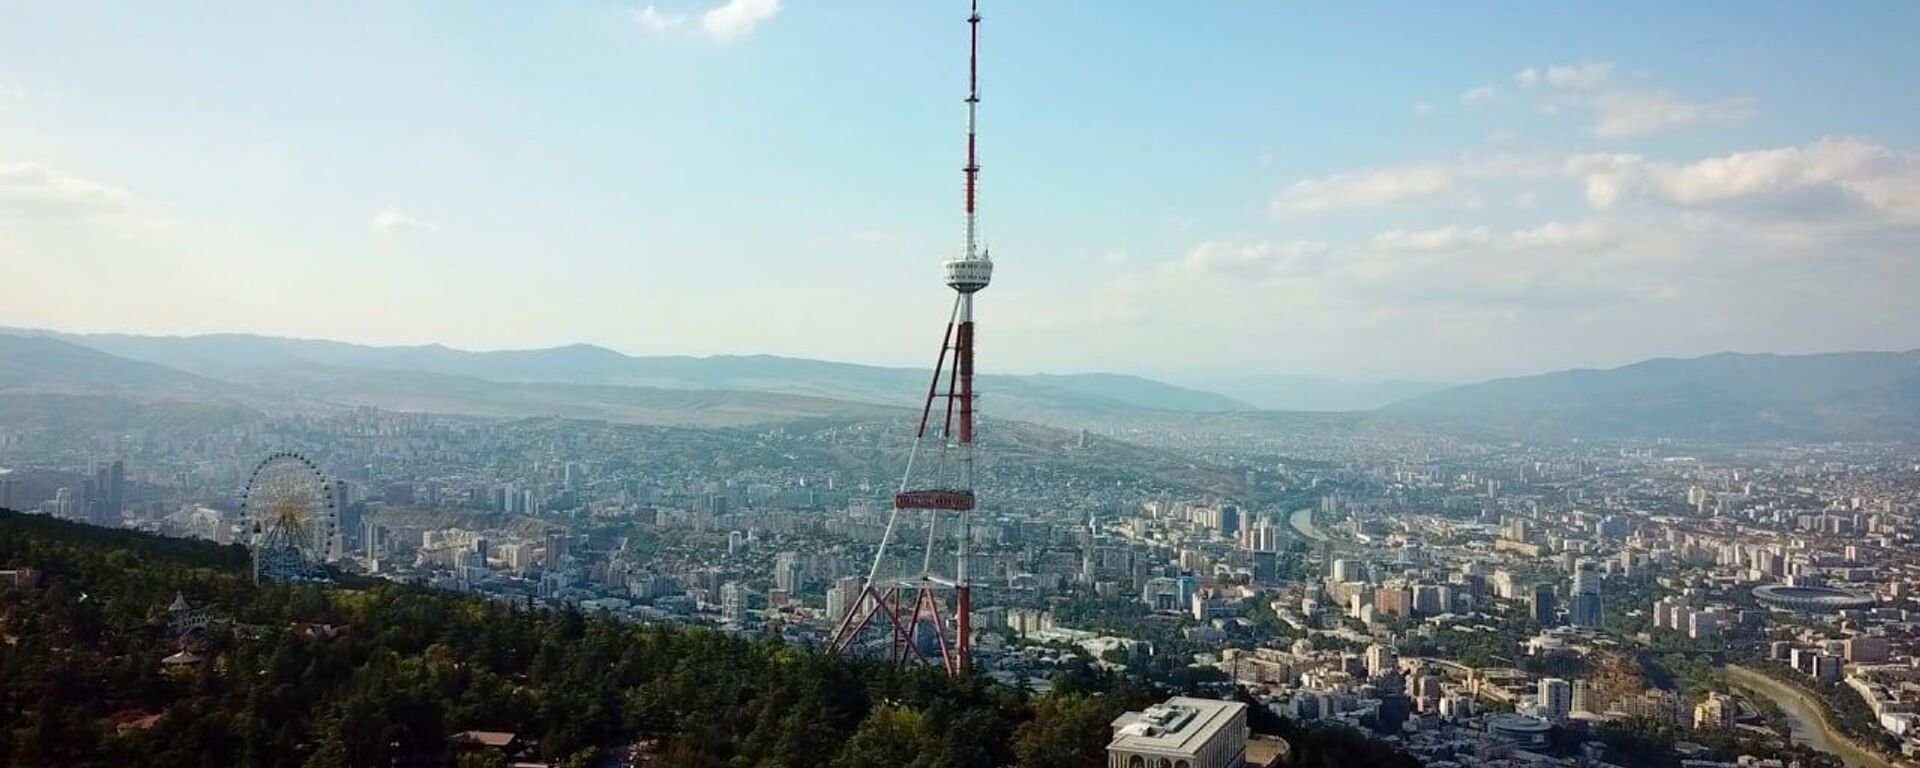 Тбилиси и гора Мтацминда, телевышка - Sputnik Грузия, 1920, 04.08.2021